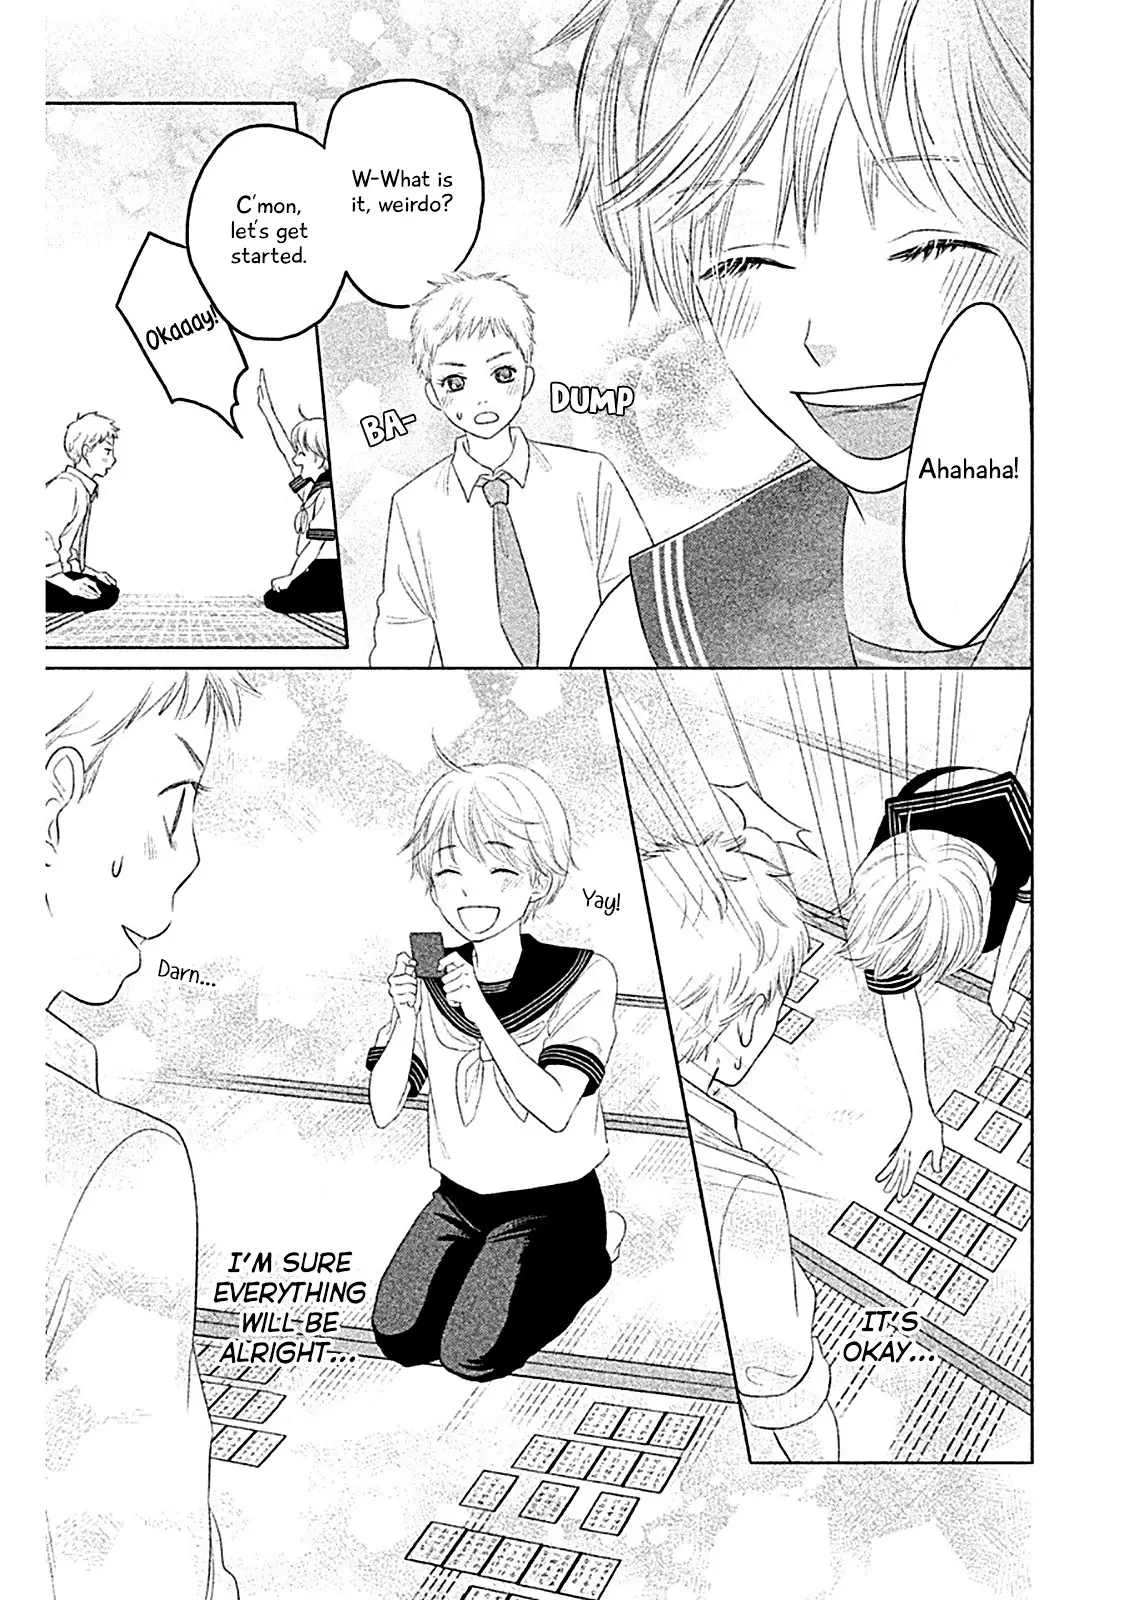 Chihayafuru: Middle School Arc - 1 page 17